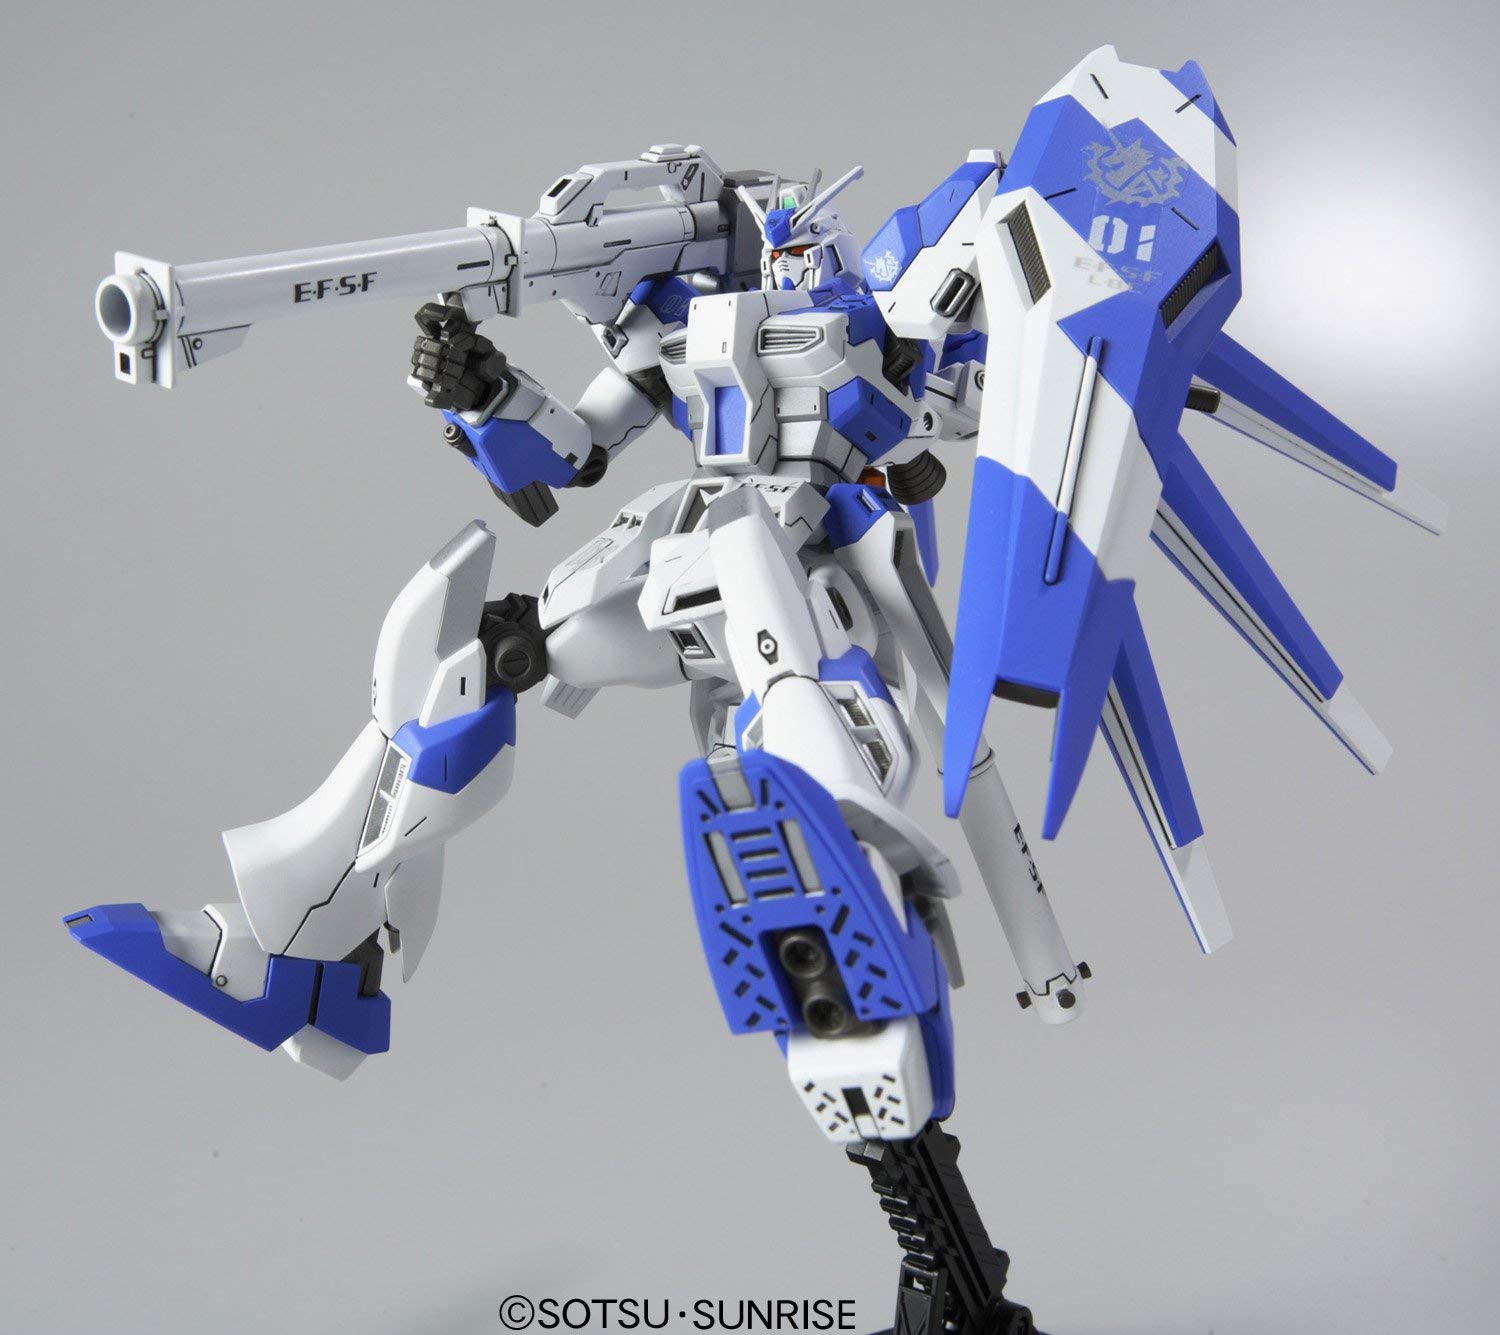 HGUC - RX-93-v2 Hi-v Nu Gundam